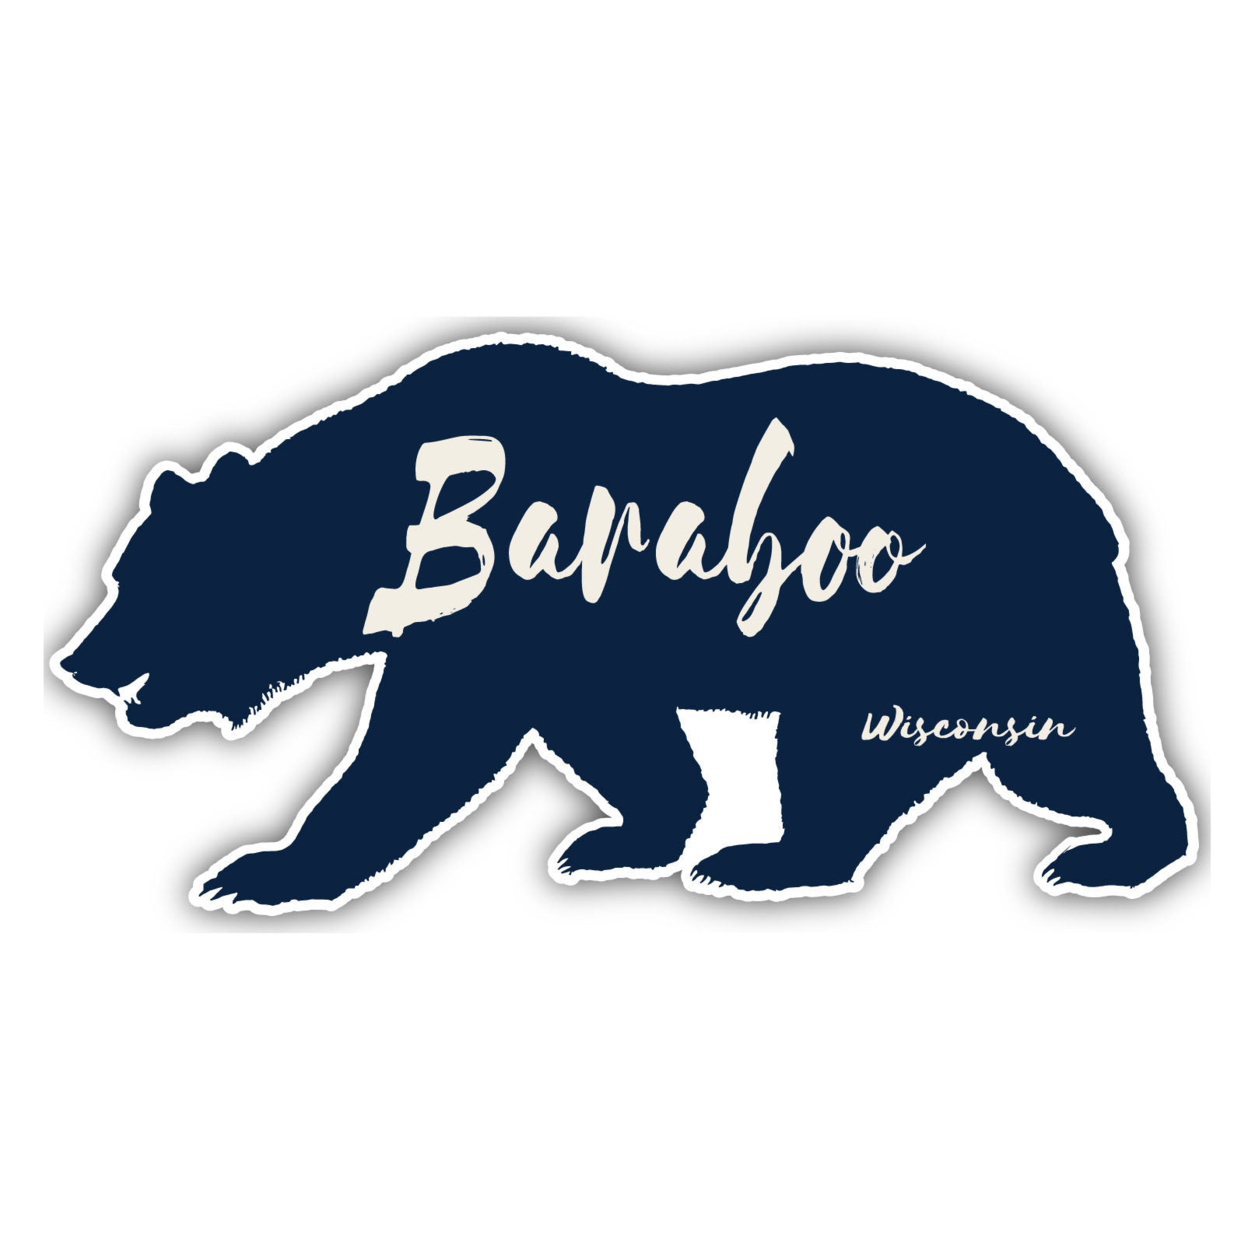 Baraboo Wisconsin Souvenir Decorative Stickers (Choose Theme And Size) - Single Unit, 4-Inch, Bear